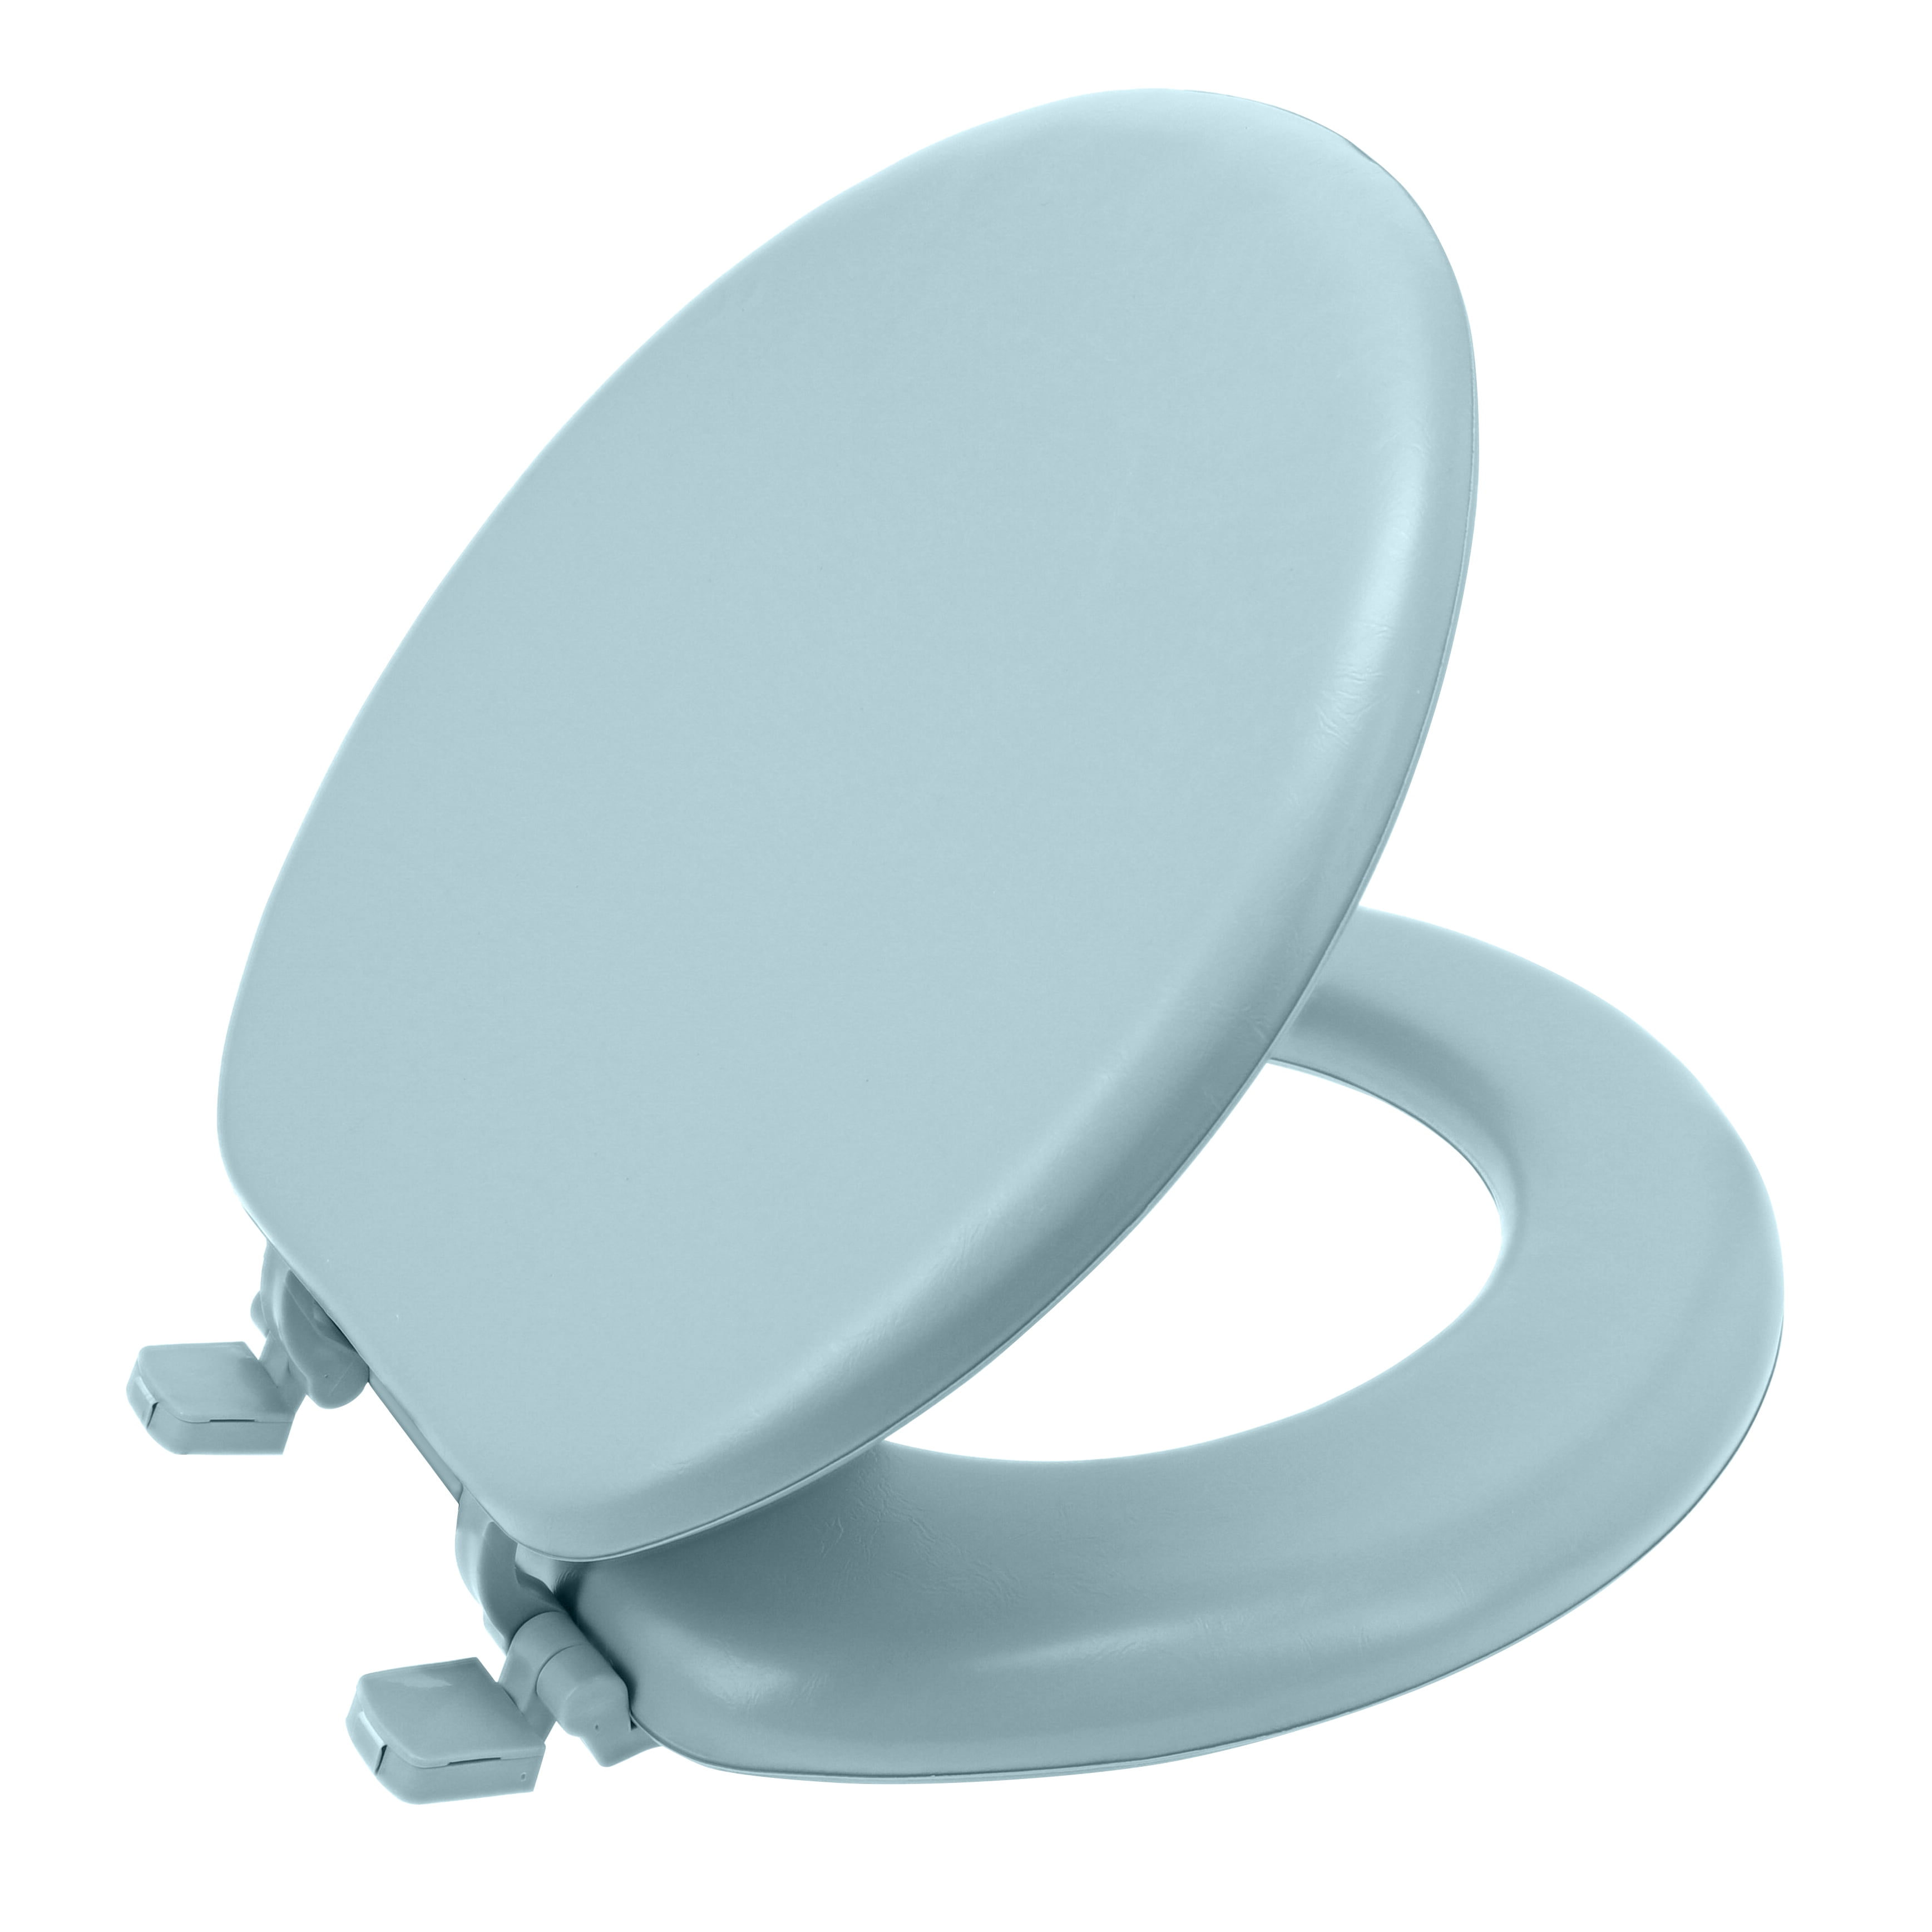 Gel Toilet Seat Cushion in Blue/ Clear